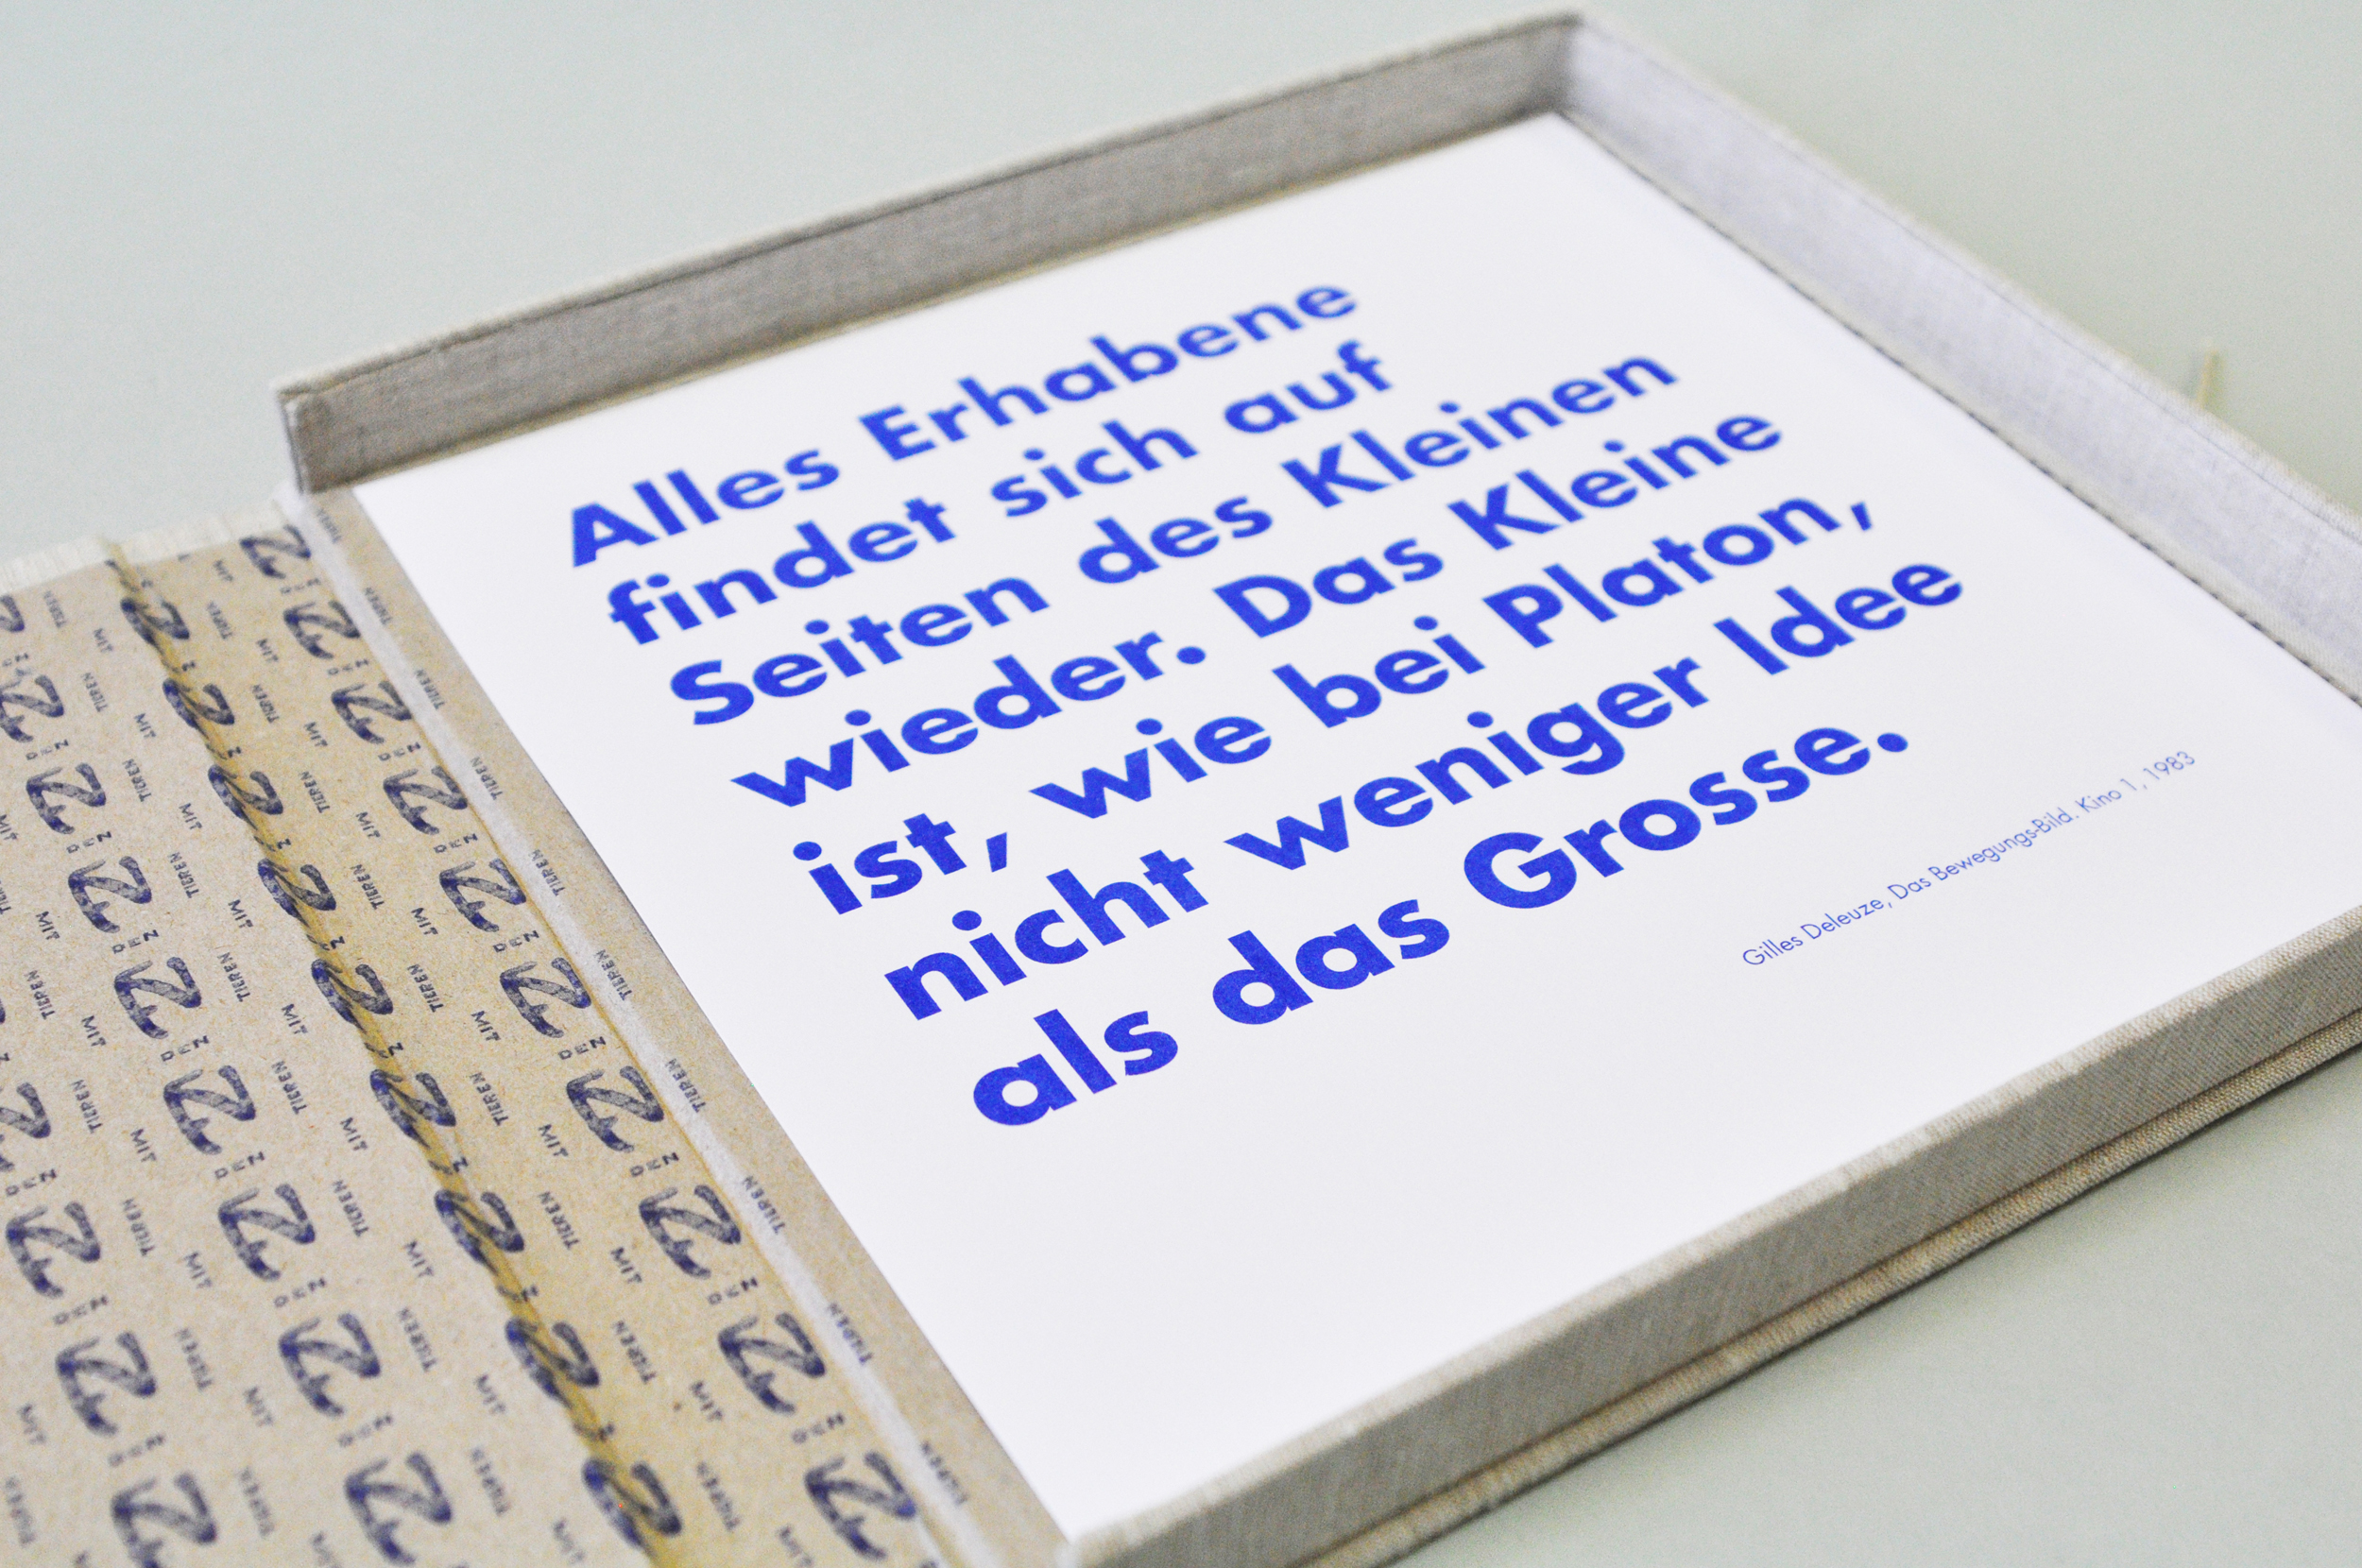 Manfred_Naescher__Edition_Ferdinand_Nigg_mit_den_Tieren_2015_-box-open-with-deleuze-quote-and-endpapers.jpg